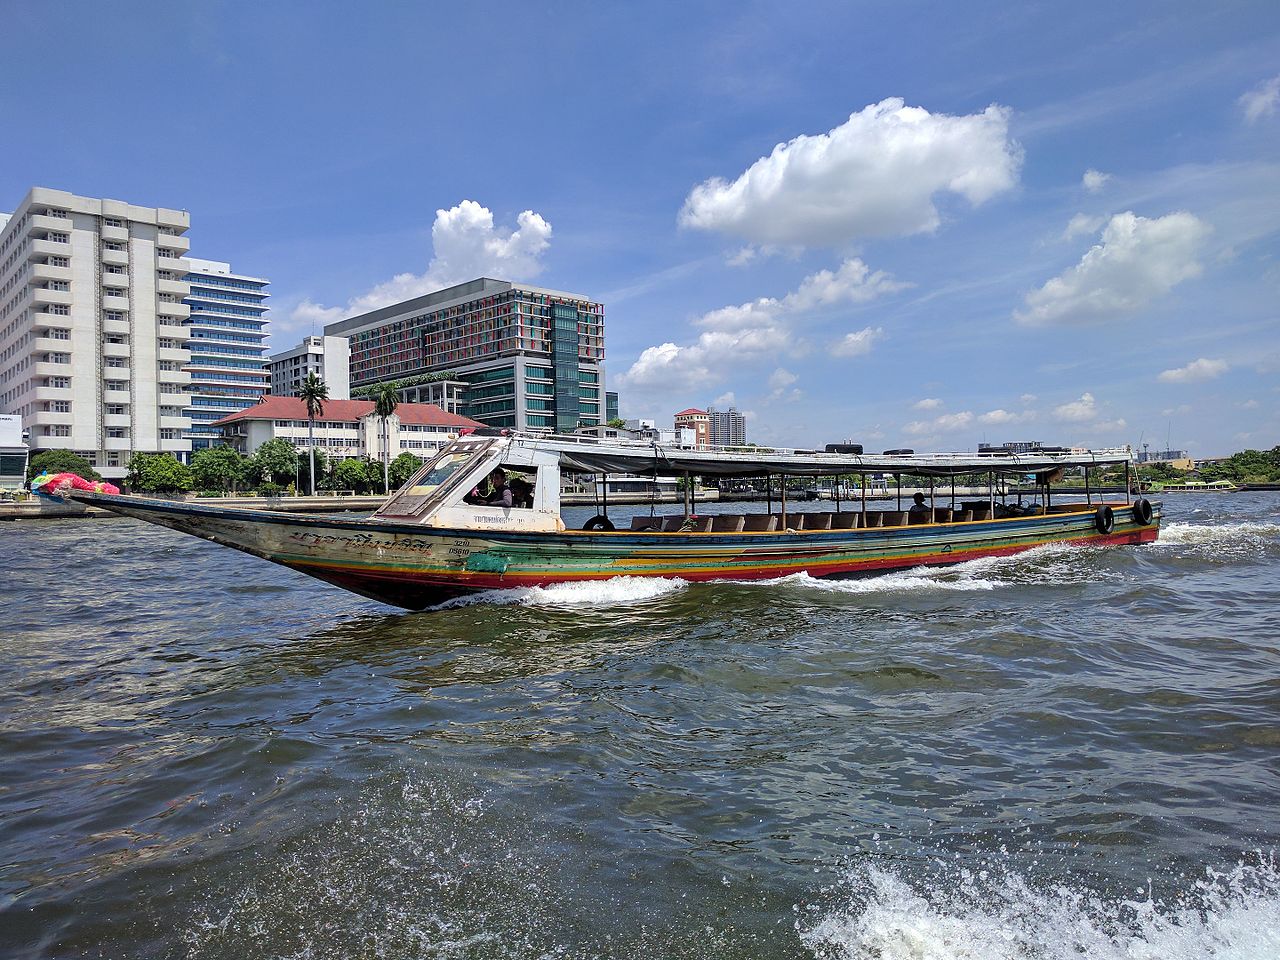 Chao Phraya https://commons.wikimedia.org/wiki/File:Long_motorboat_on_the_Chao_Phraya_River_in_Bangkok.jpg